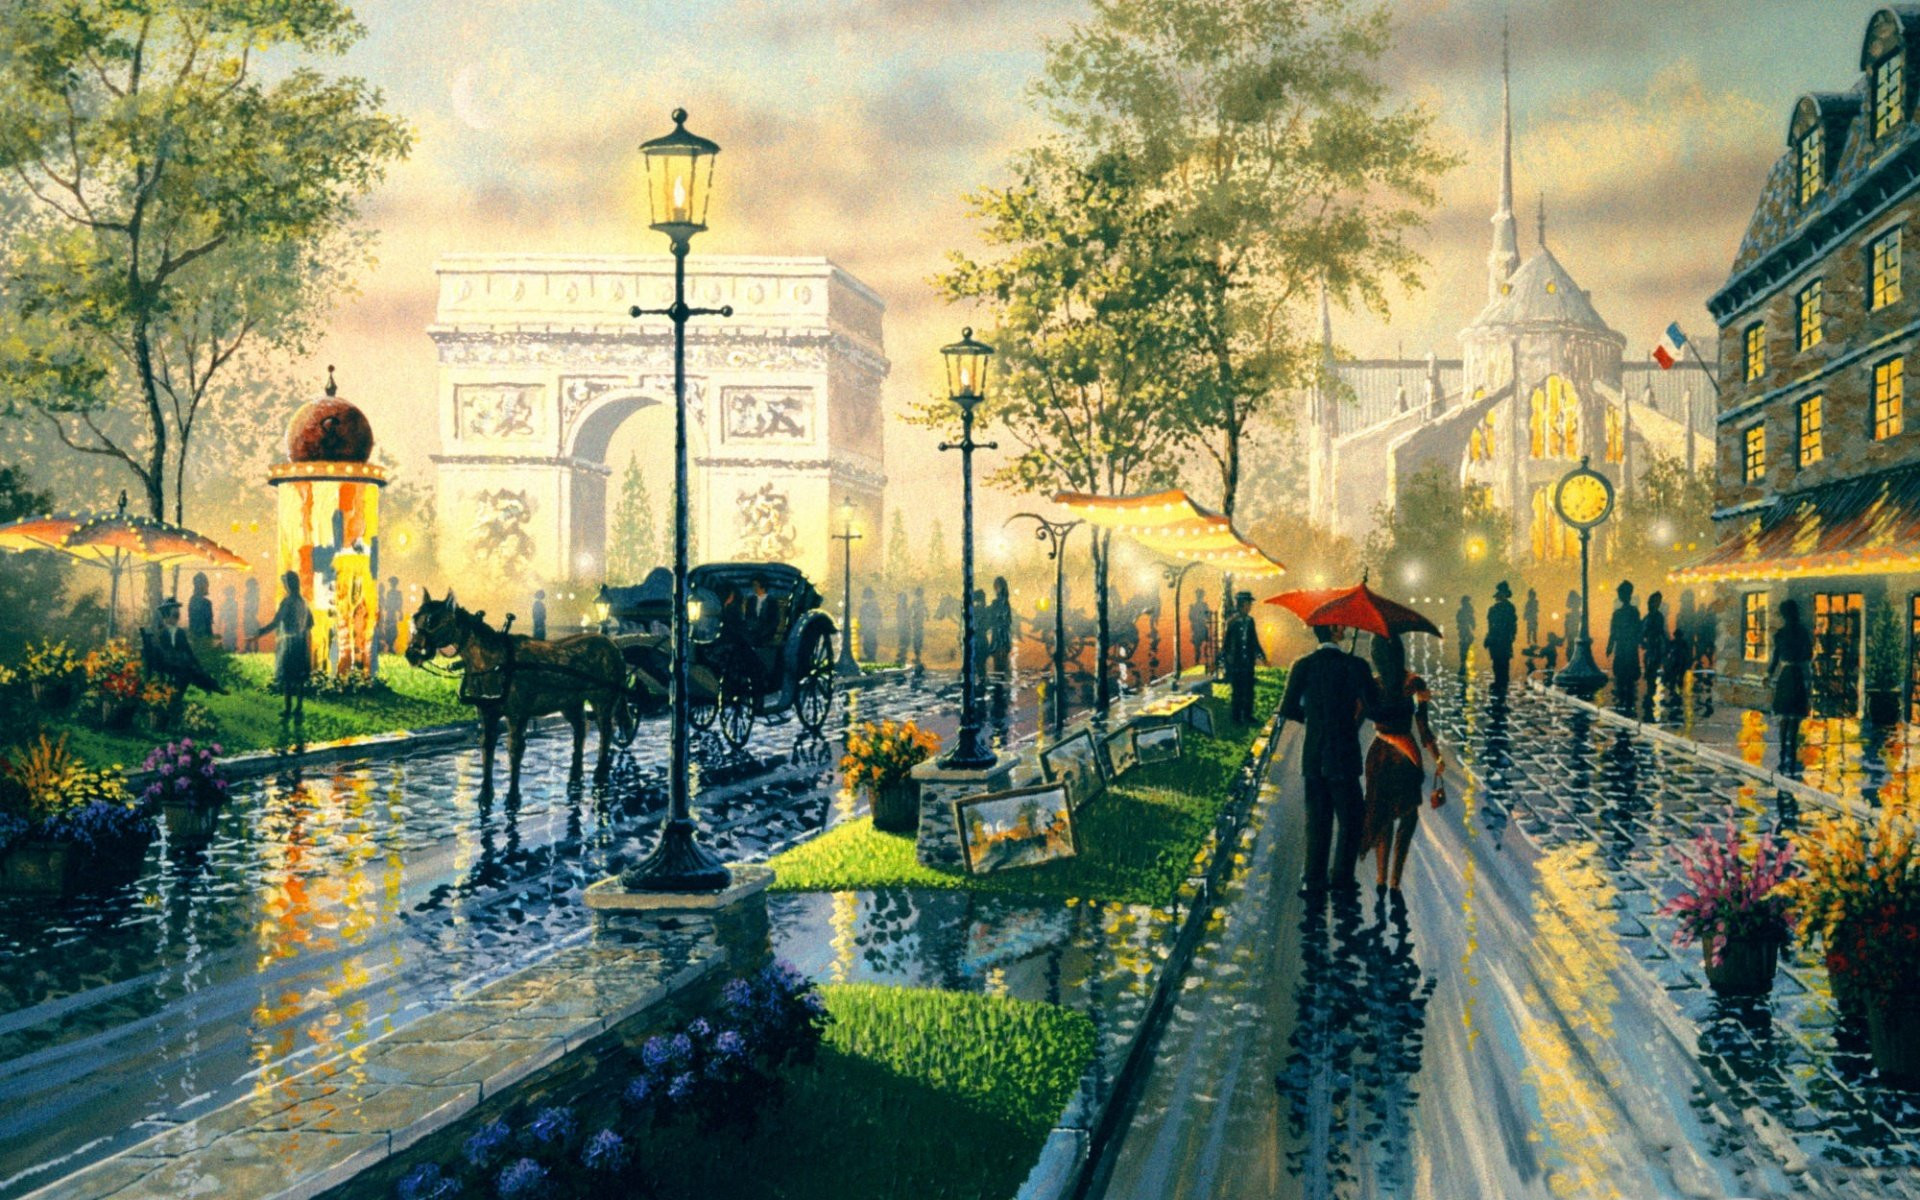 Нотр-Дам де Пари, картина, Париж, триумфальная арка, улица, дождь, пара под зонтом, карета с лошадьми, вечер, фонари